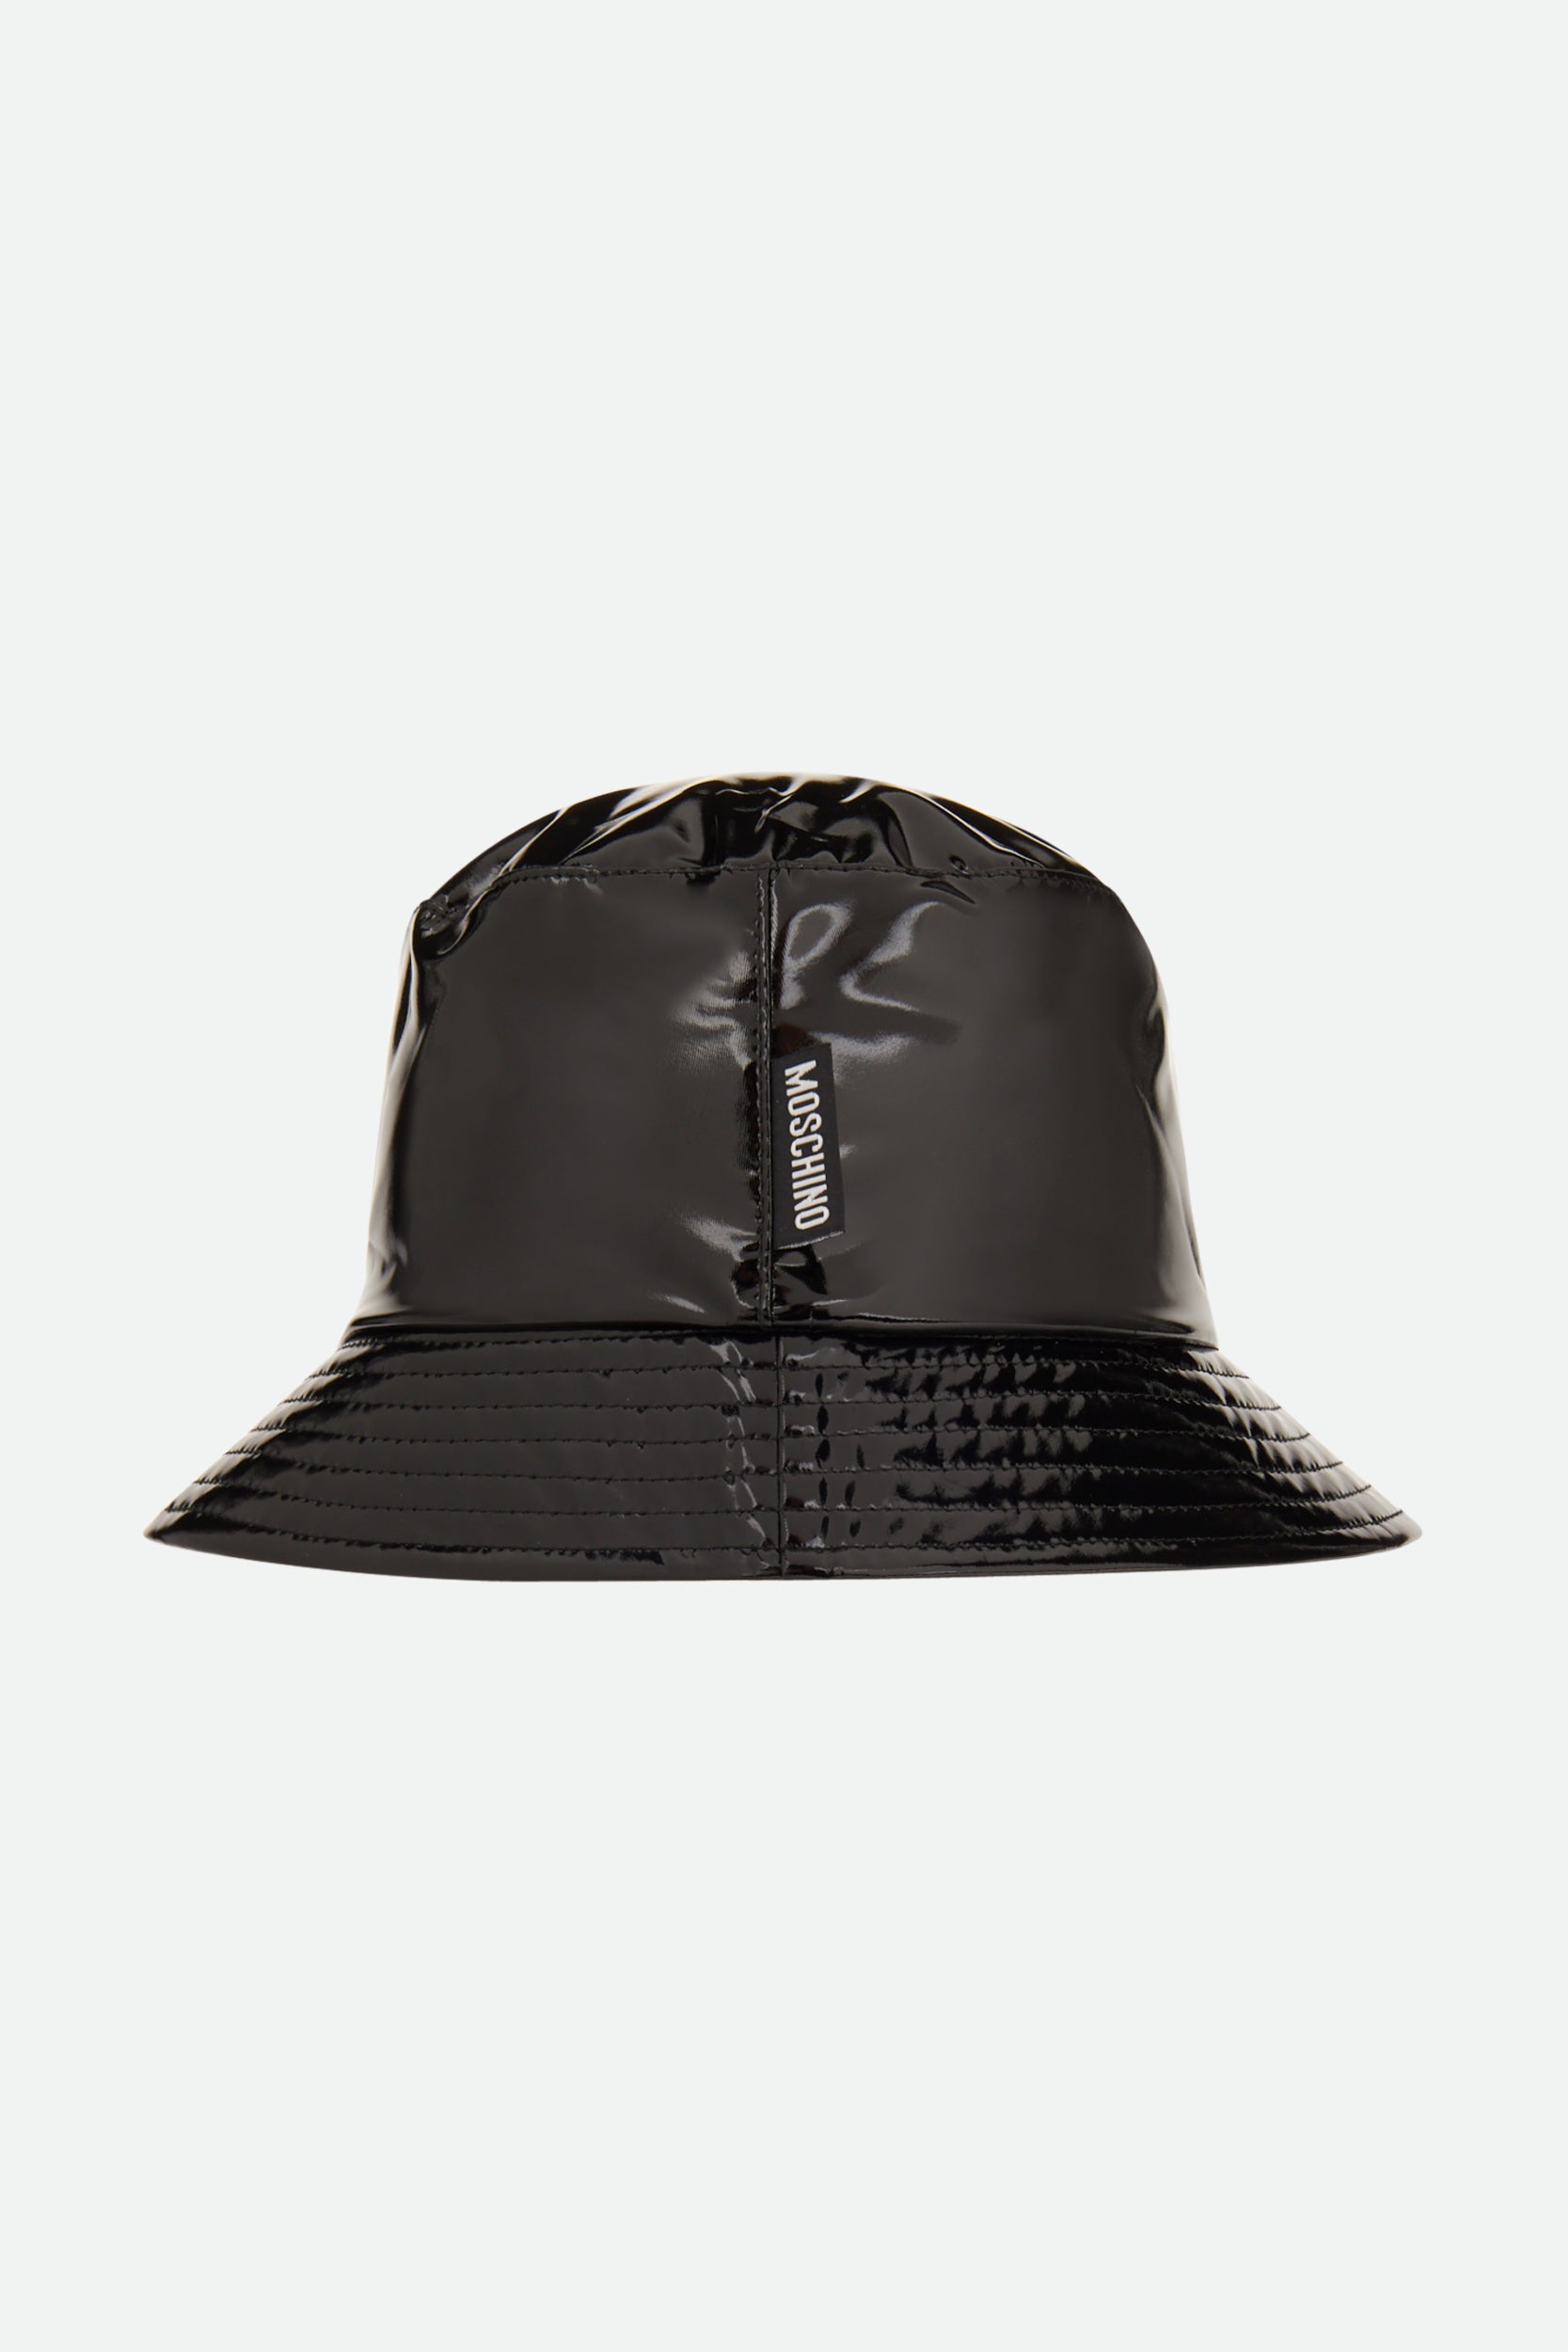 Moschino Black Vinyl Hat